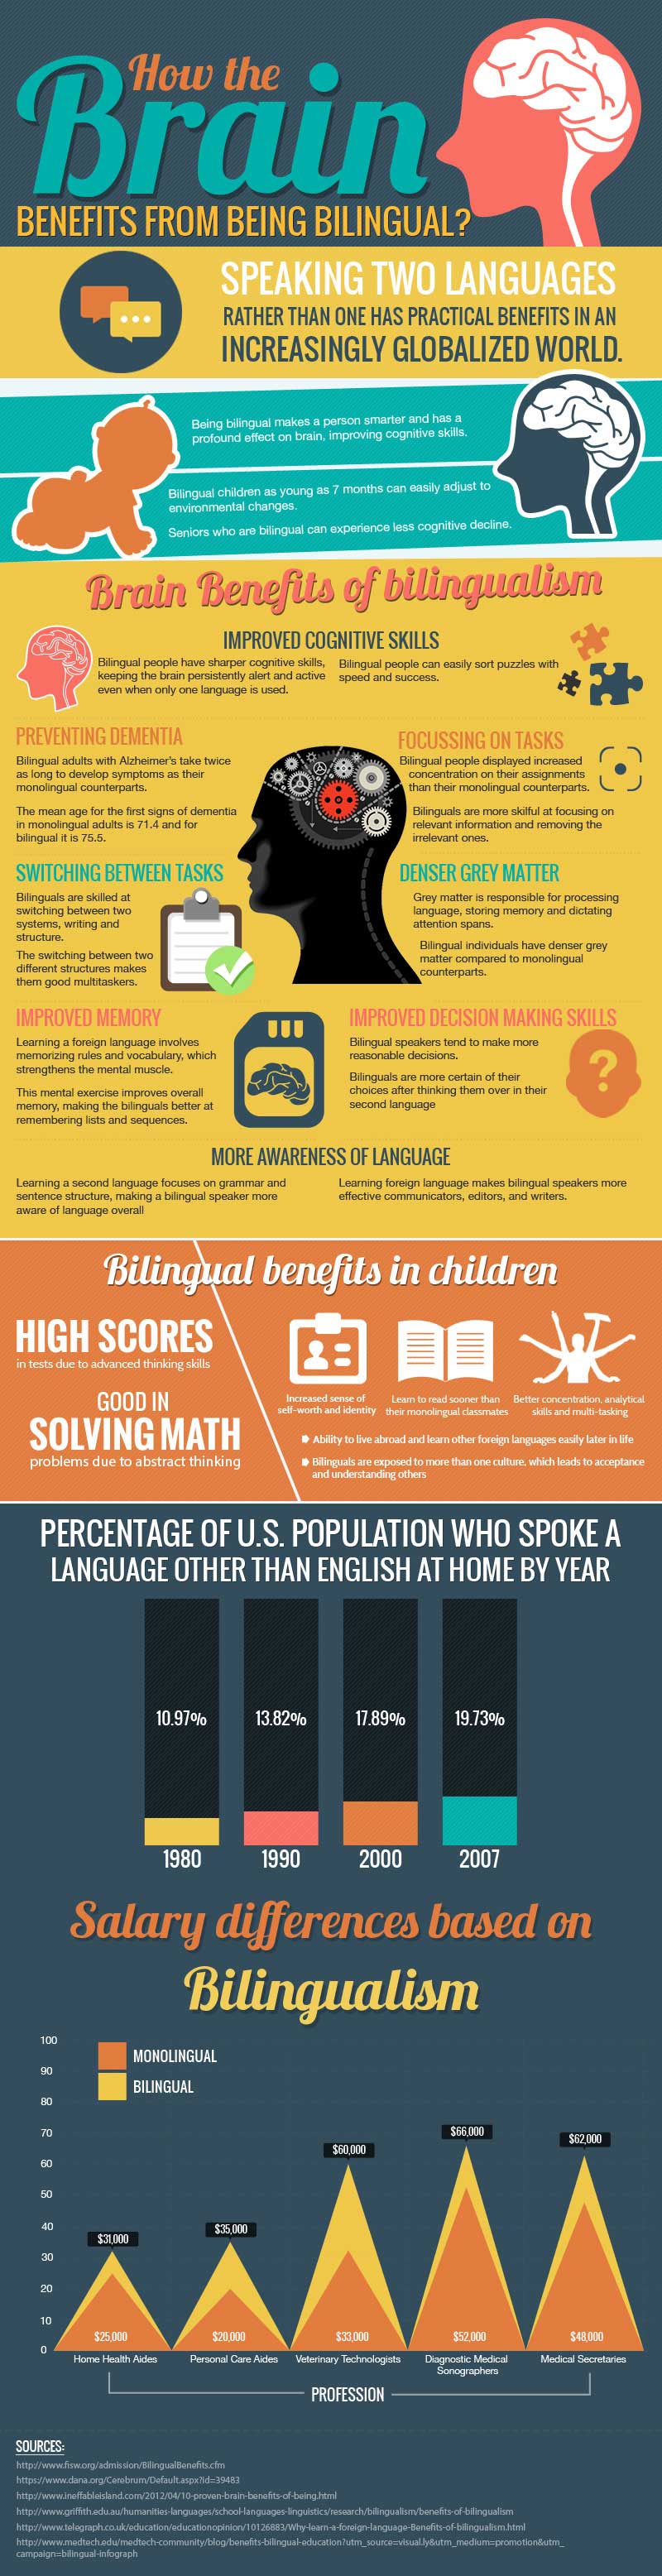 bilingualism infographic